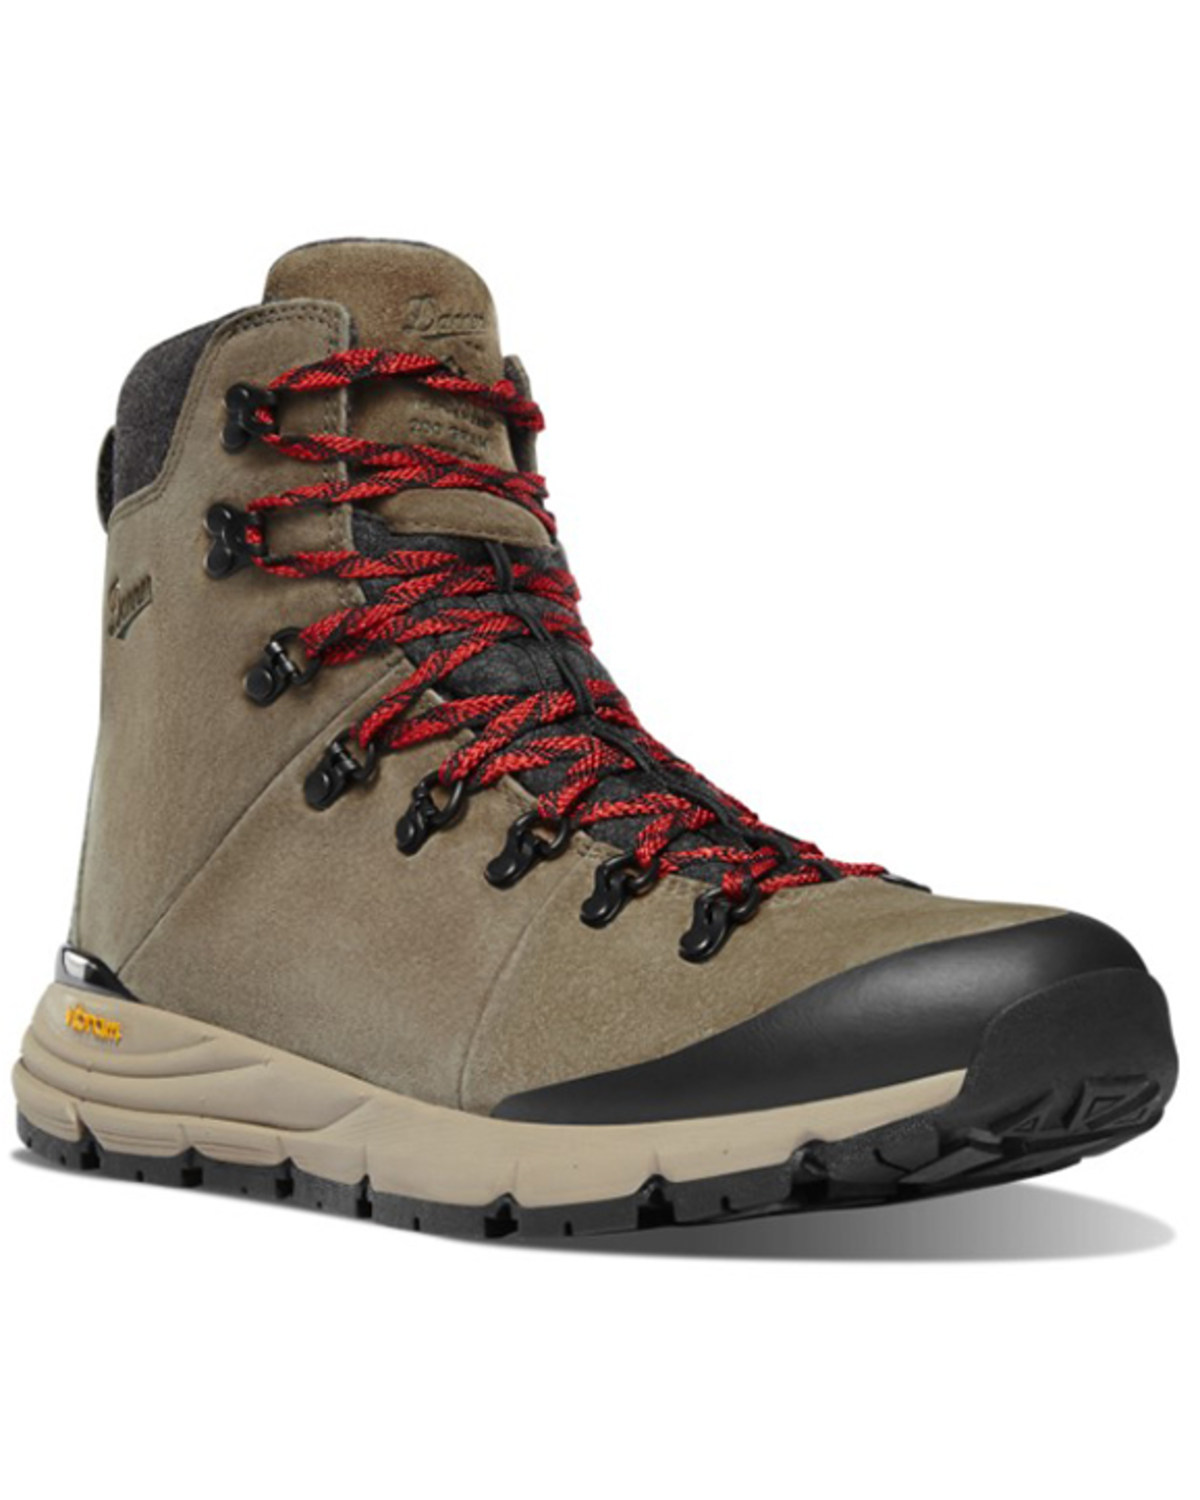 Danner Men's Arctic 600 Side Zip Lace-Up Hiking Boot